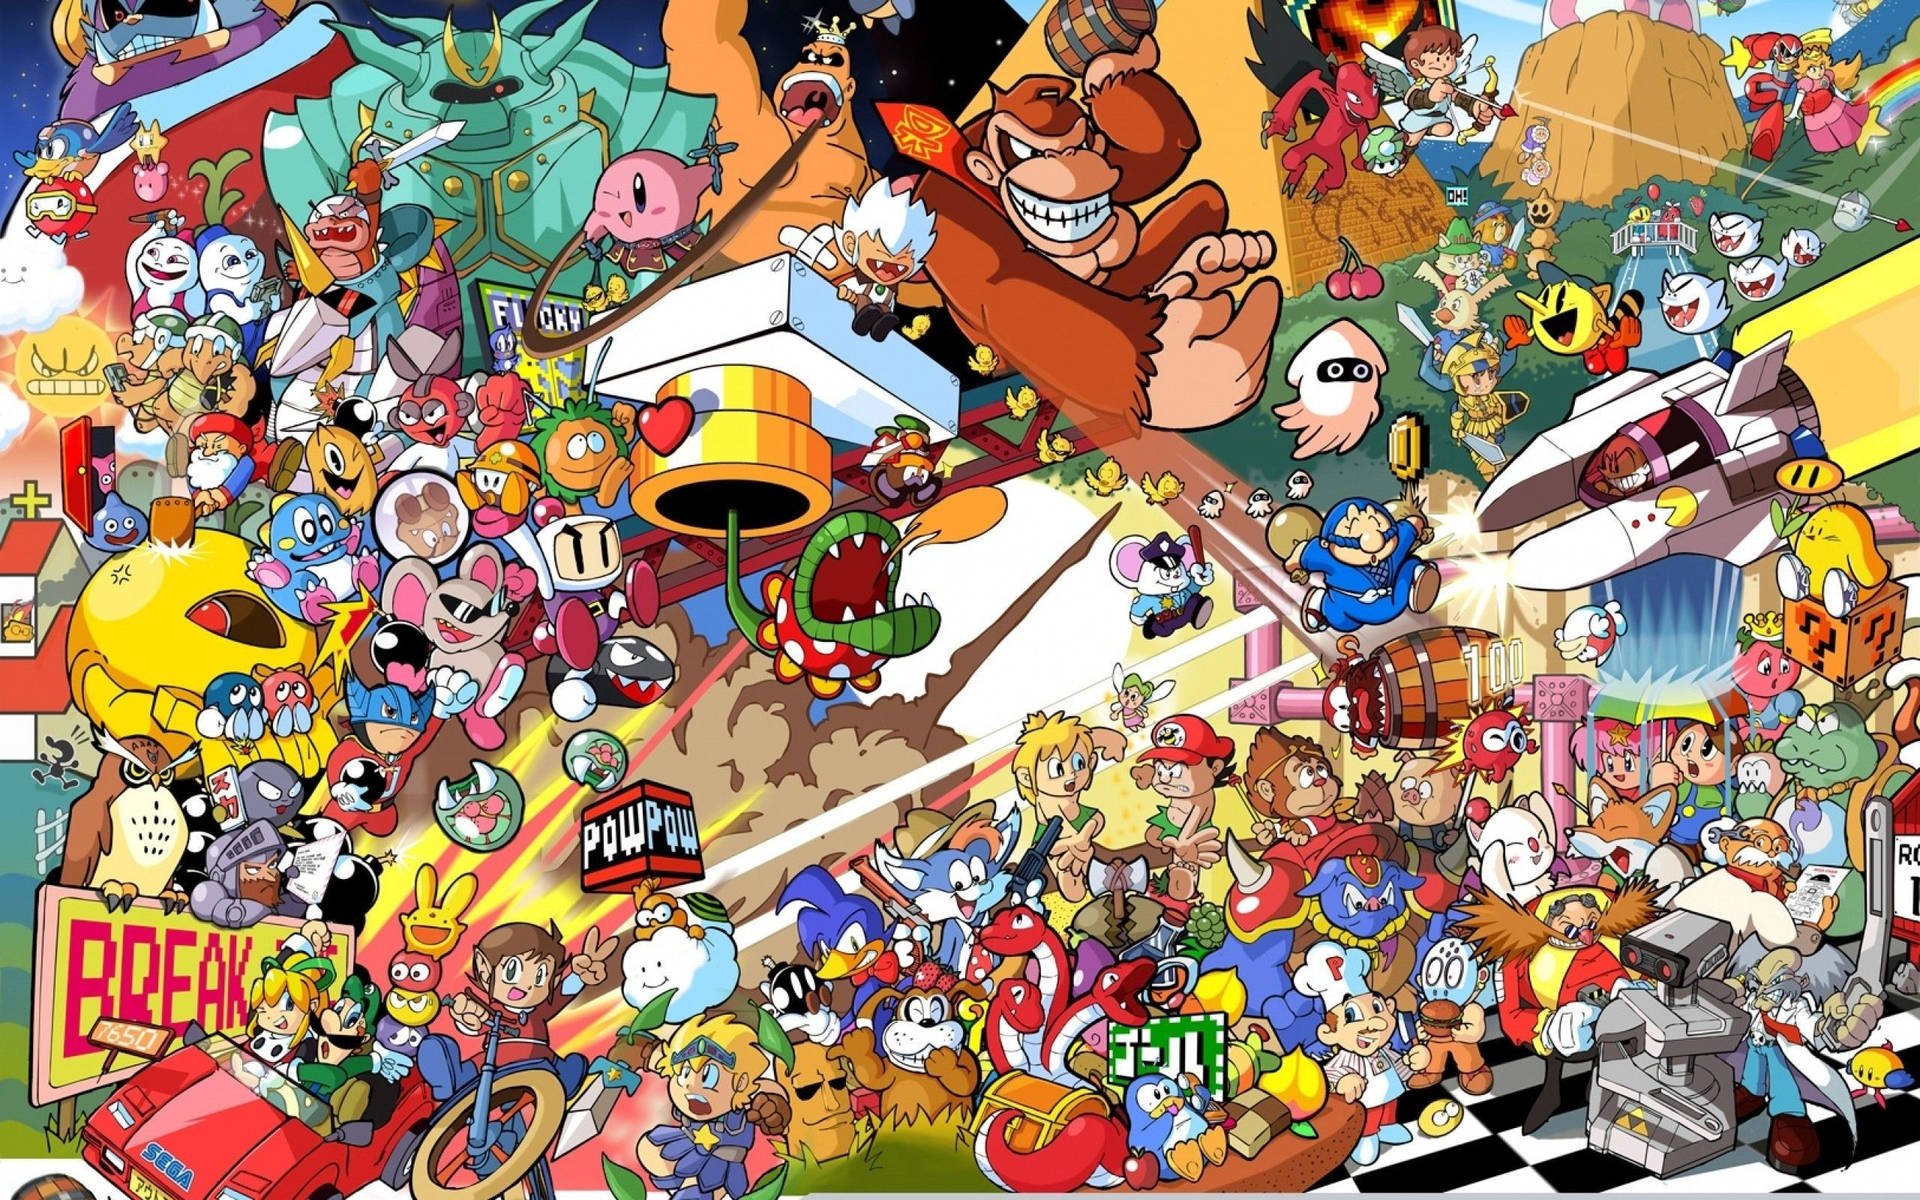 Free Smash Bros Ultimate Wallpaper Downloads, Smash Bros Ultimate Wallpaper for FREE